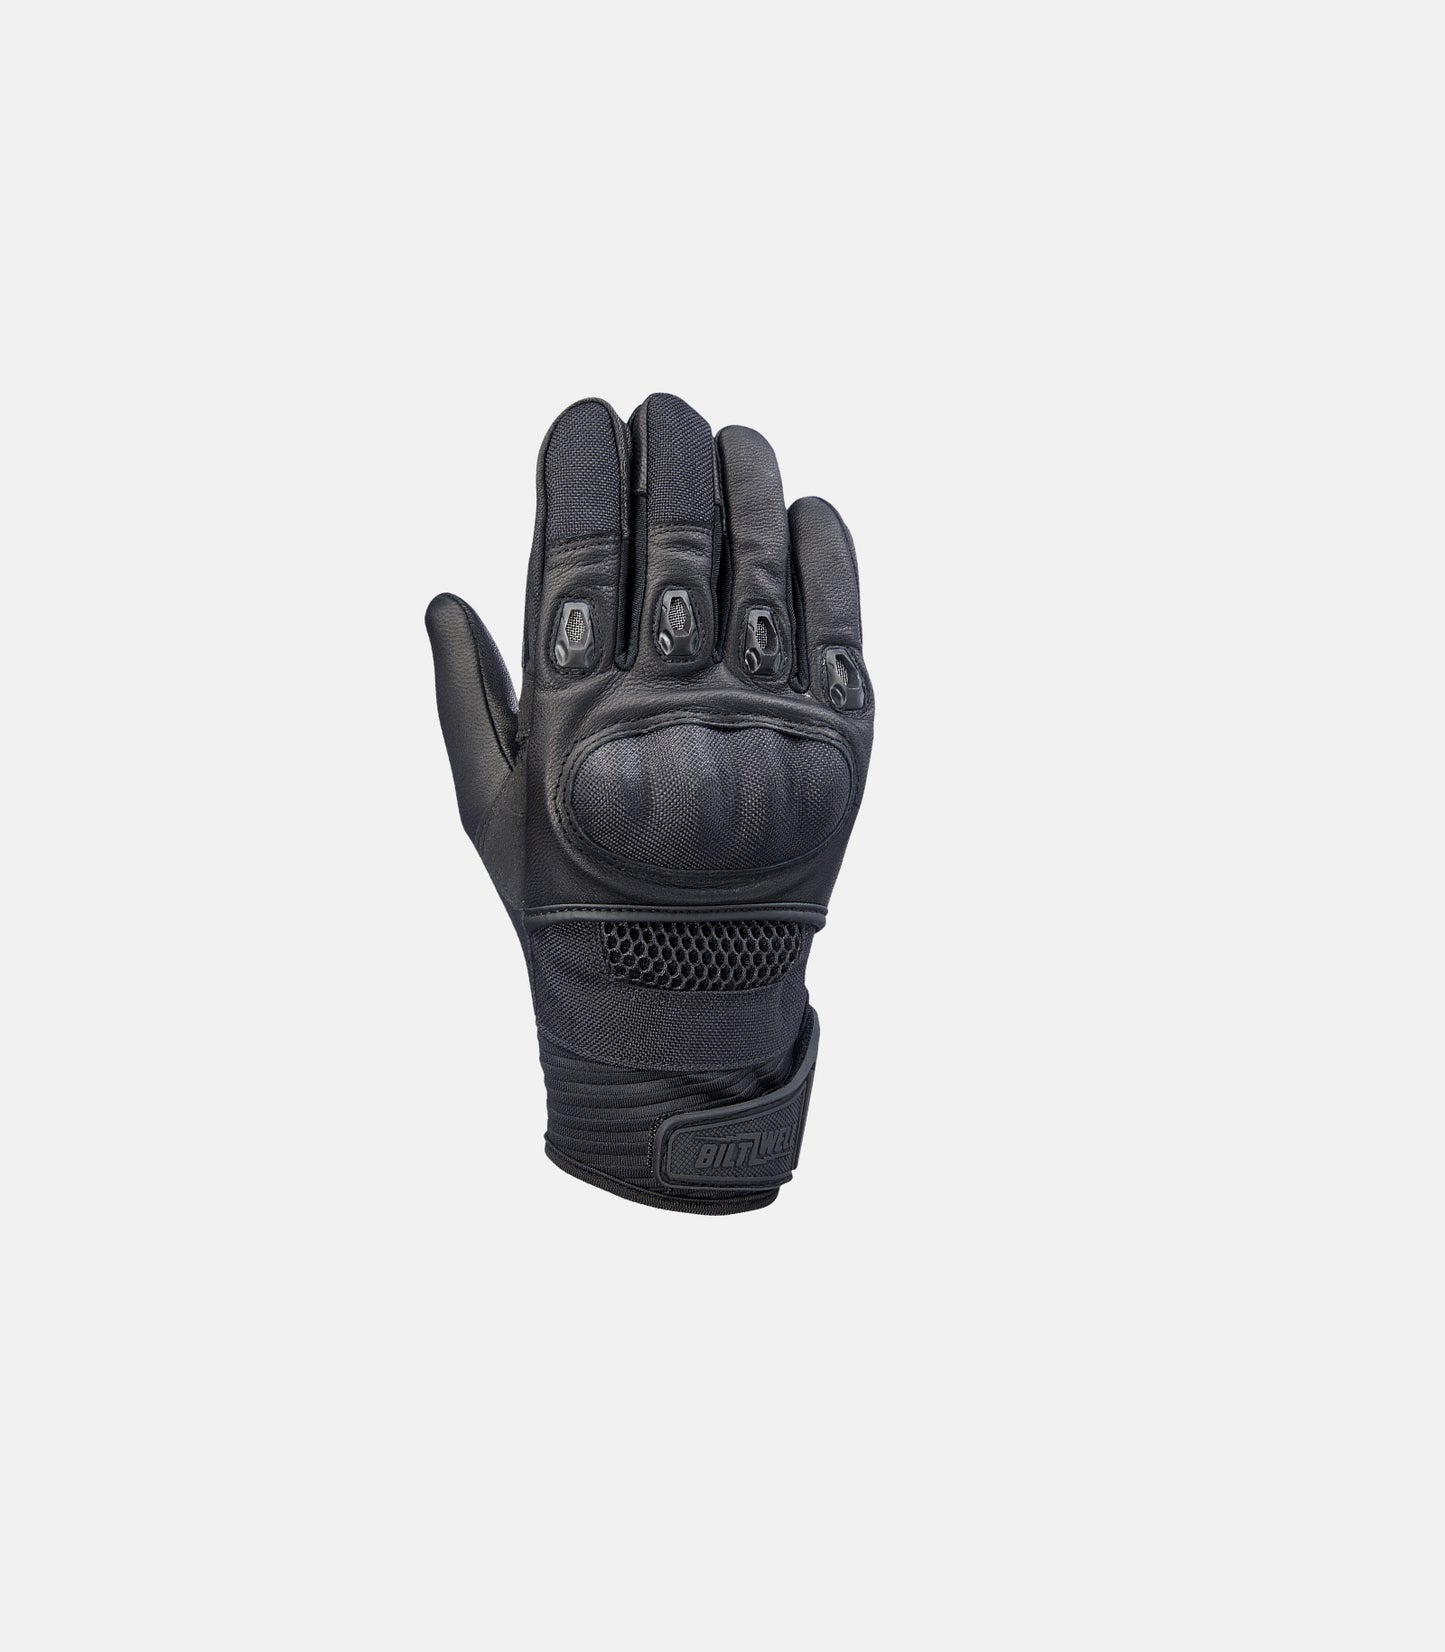 BILTWELL Bridgeport Gloves - Black